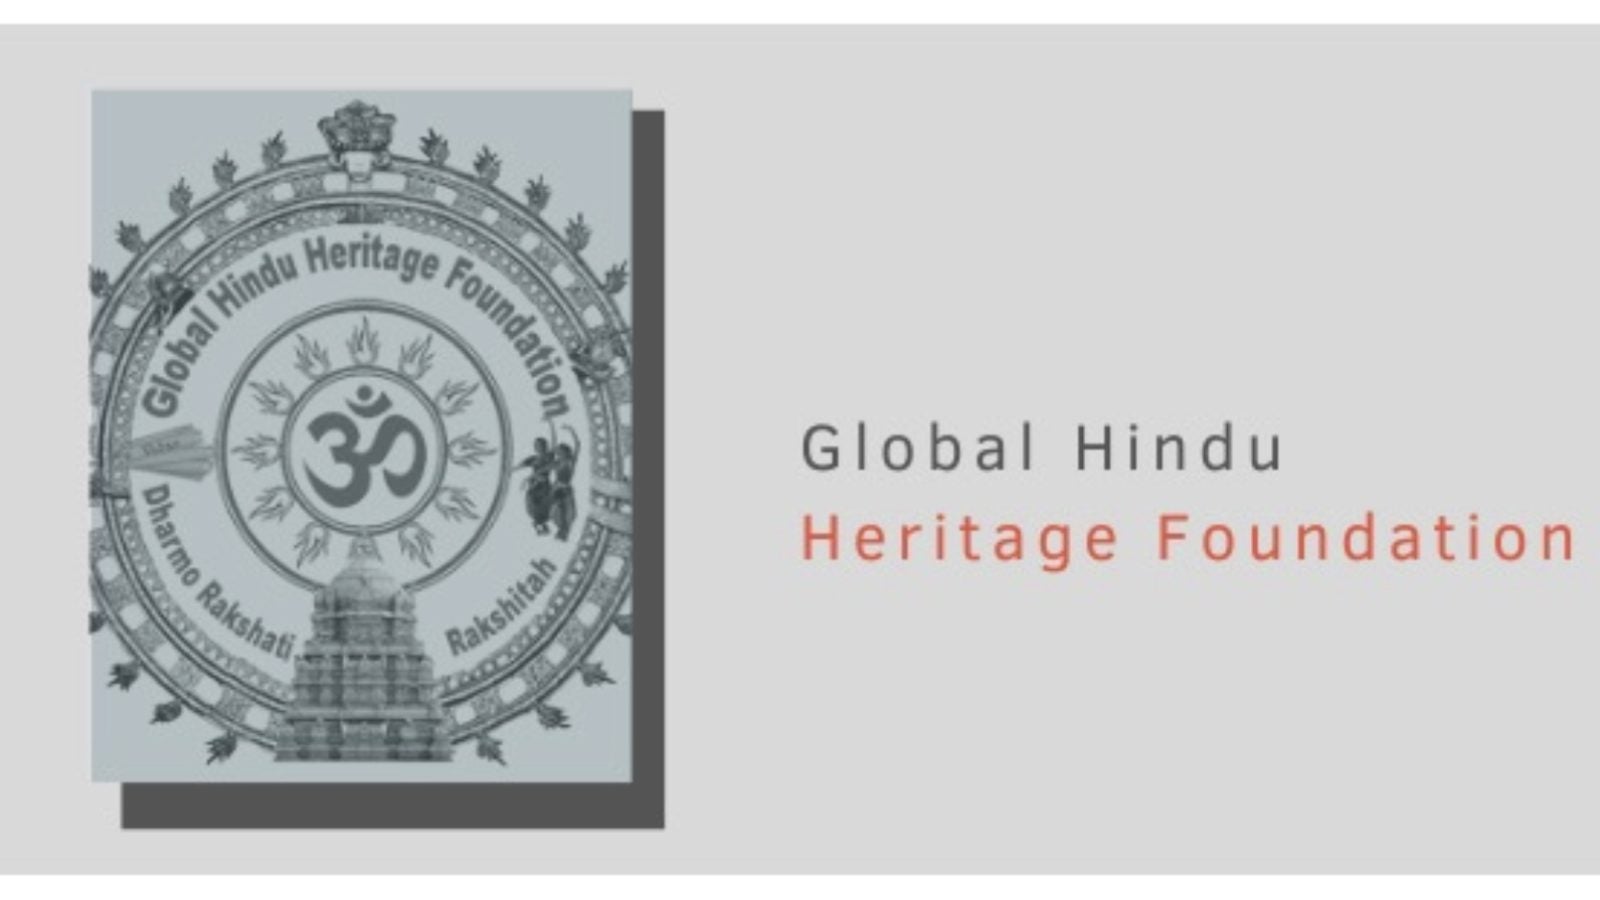 Global Hindu Heritage Foundation